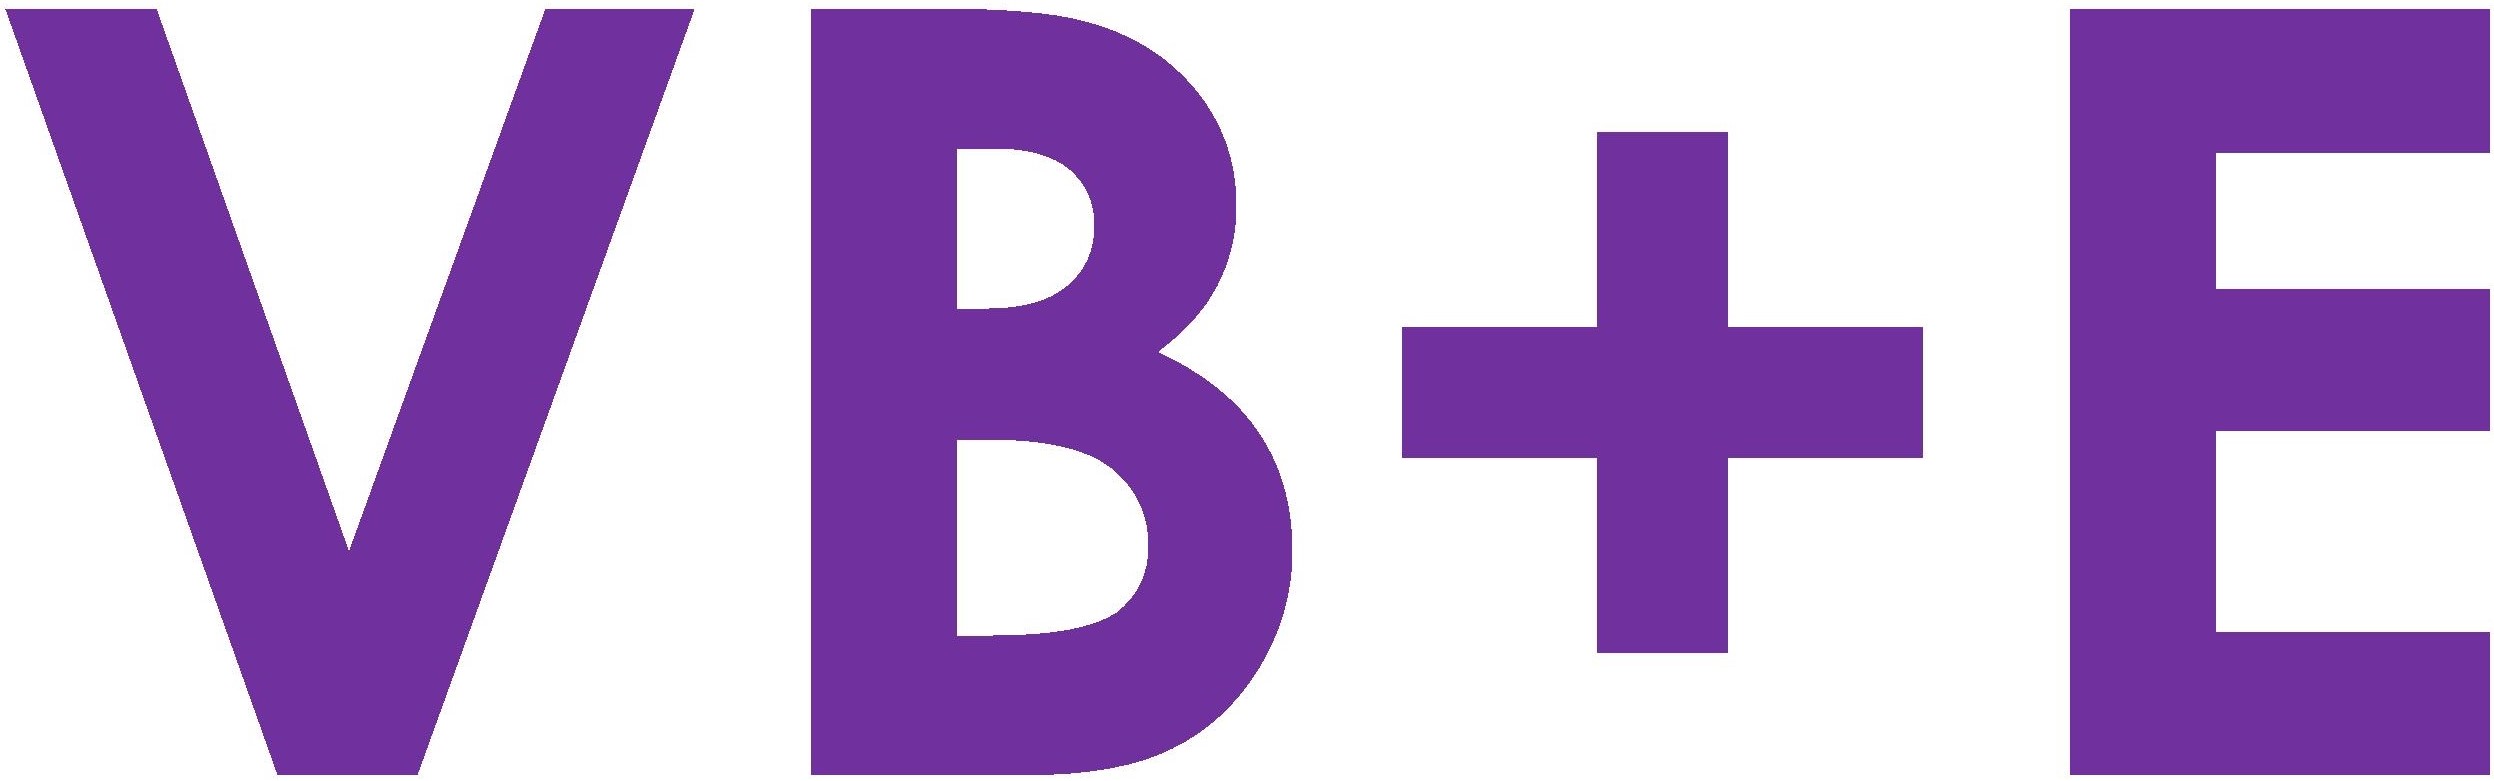 Vb+e Pte. Ltd. company logo